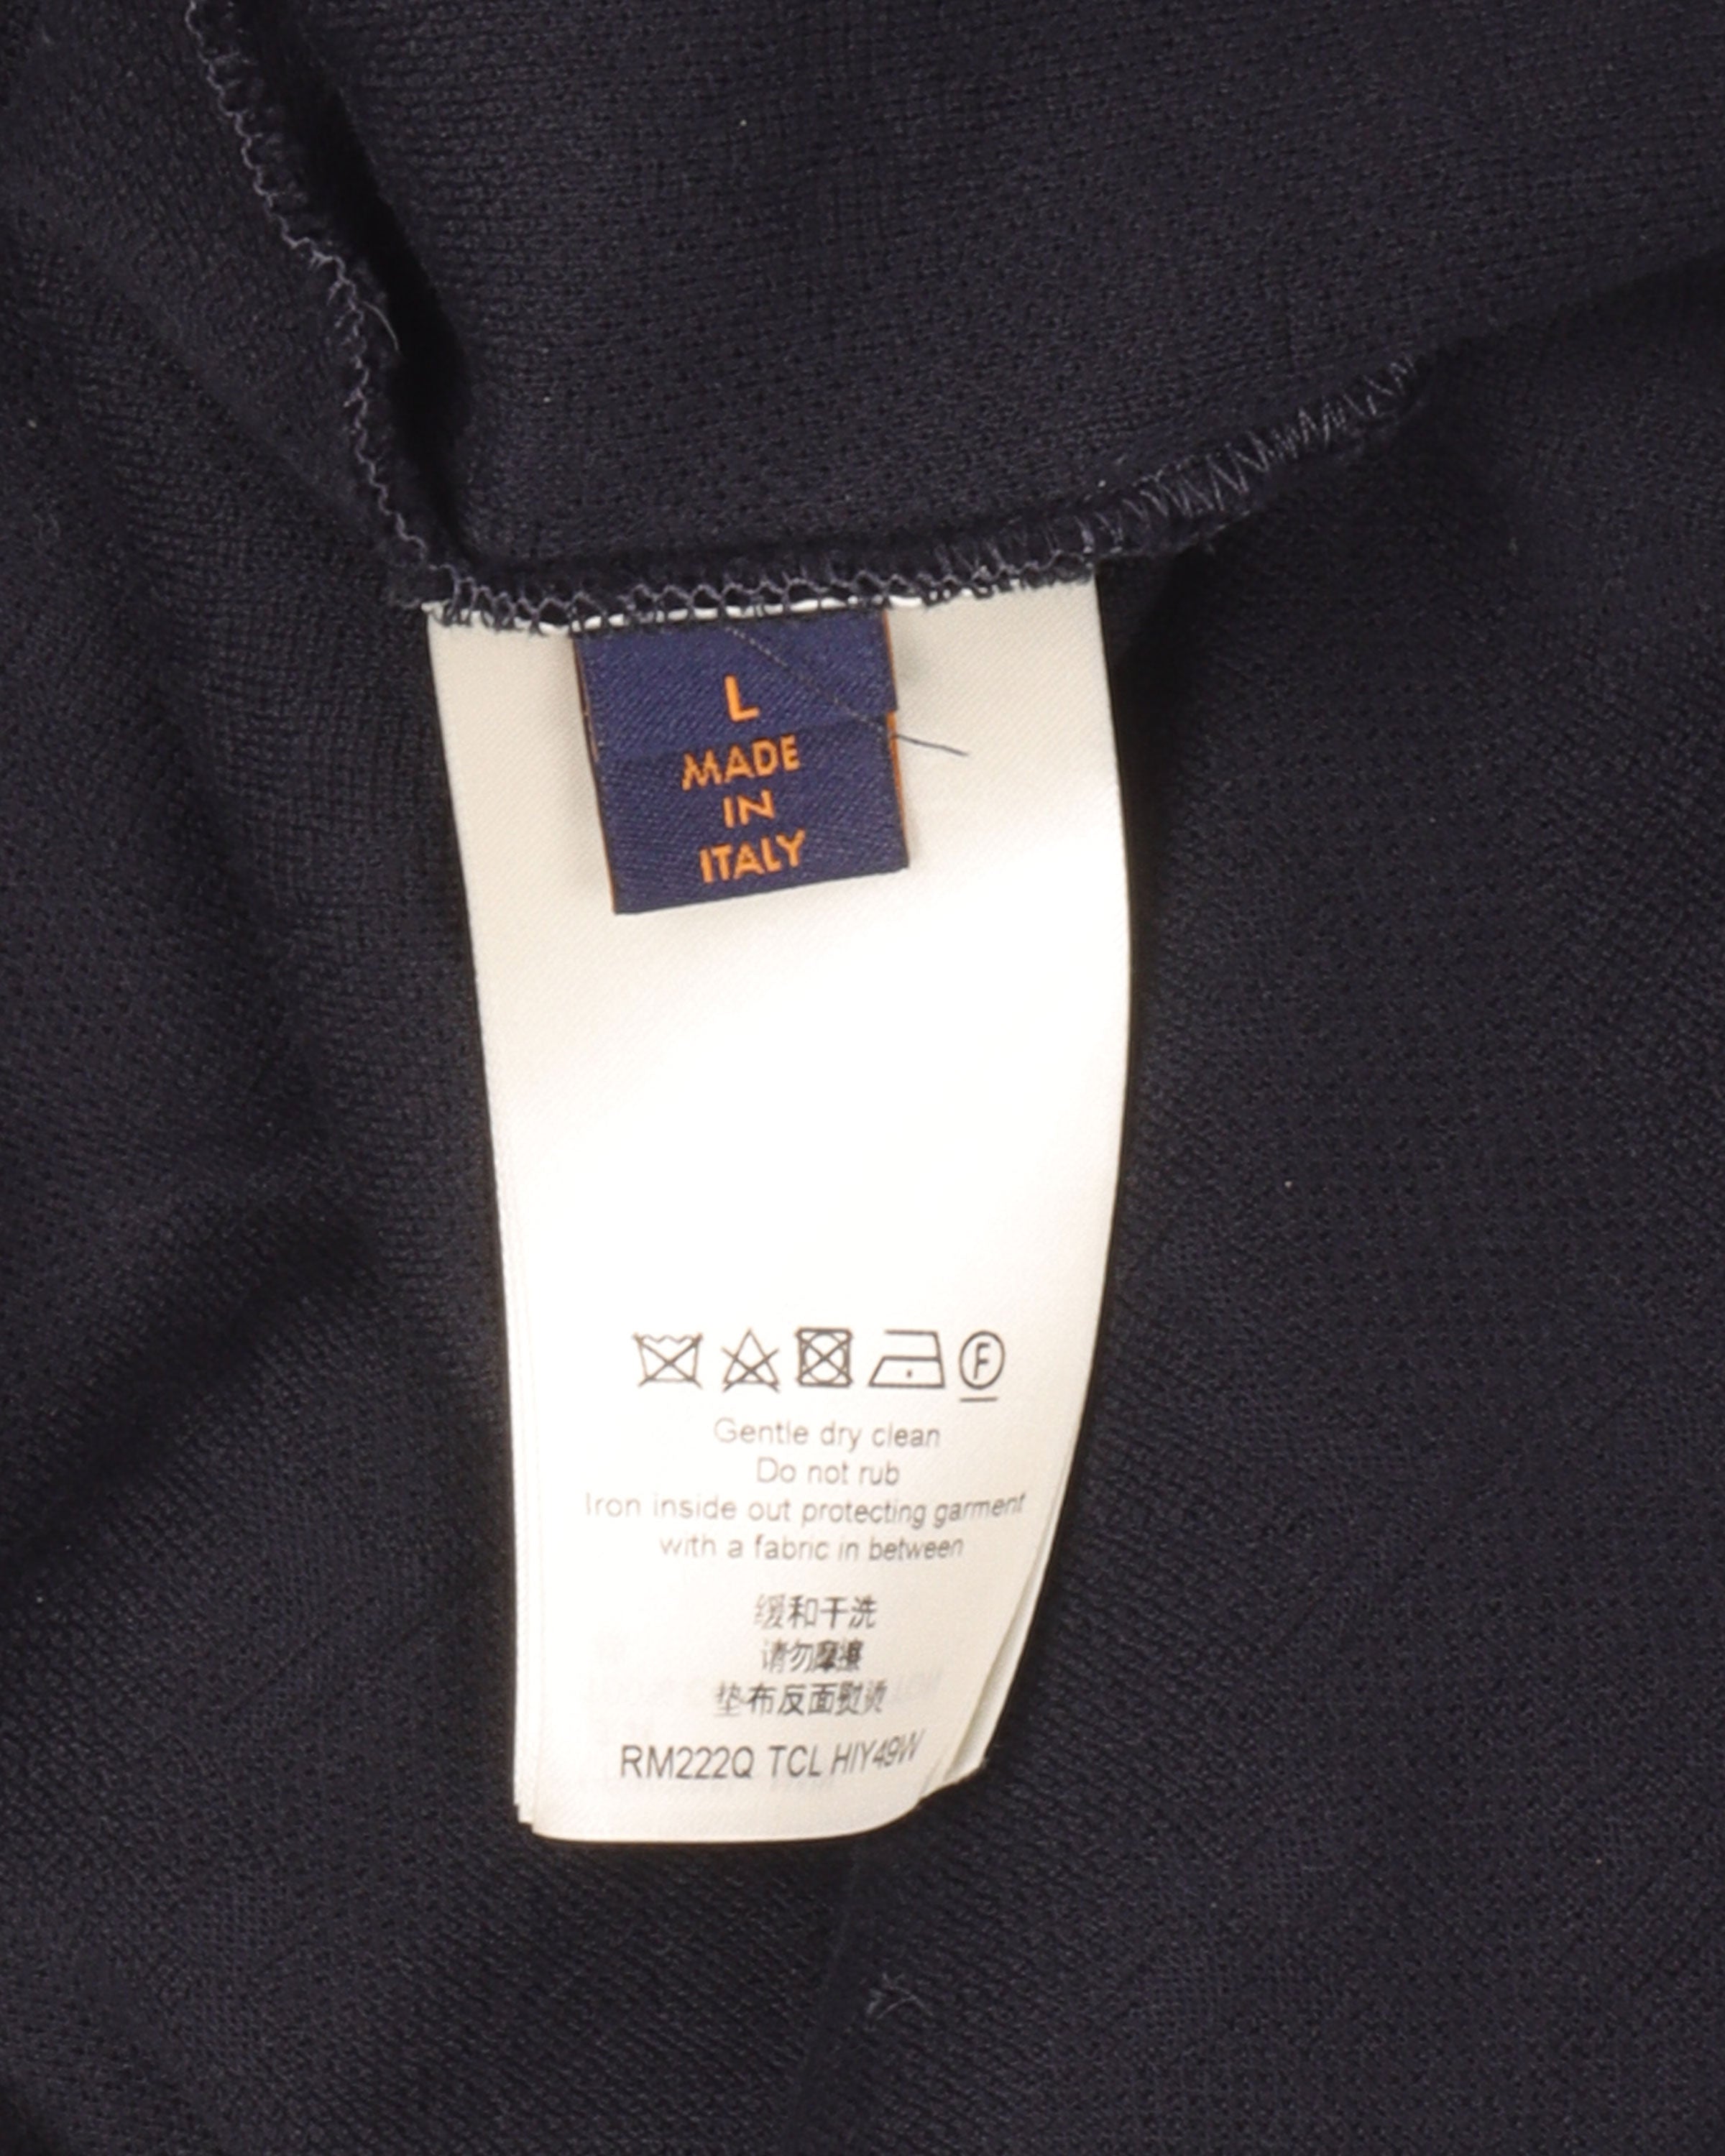 Louis Vuitton Monogram Pocket Knit T-Shirt Night Blue. Size M0